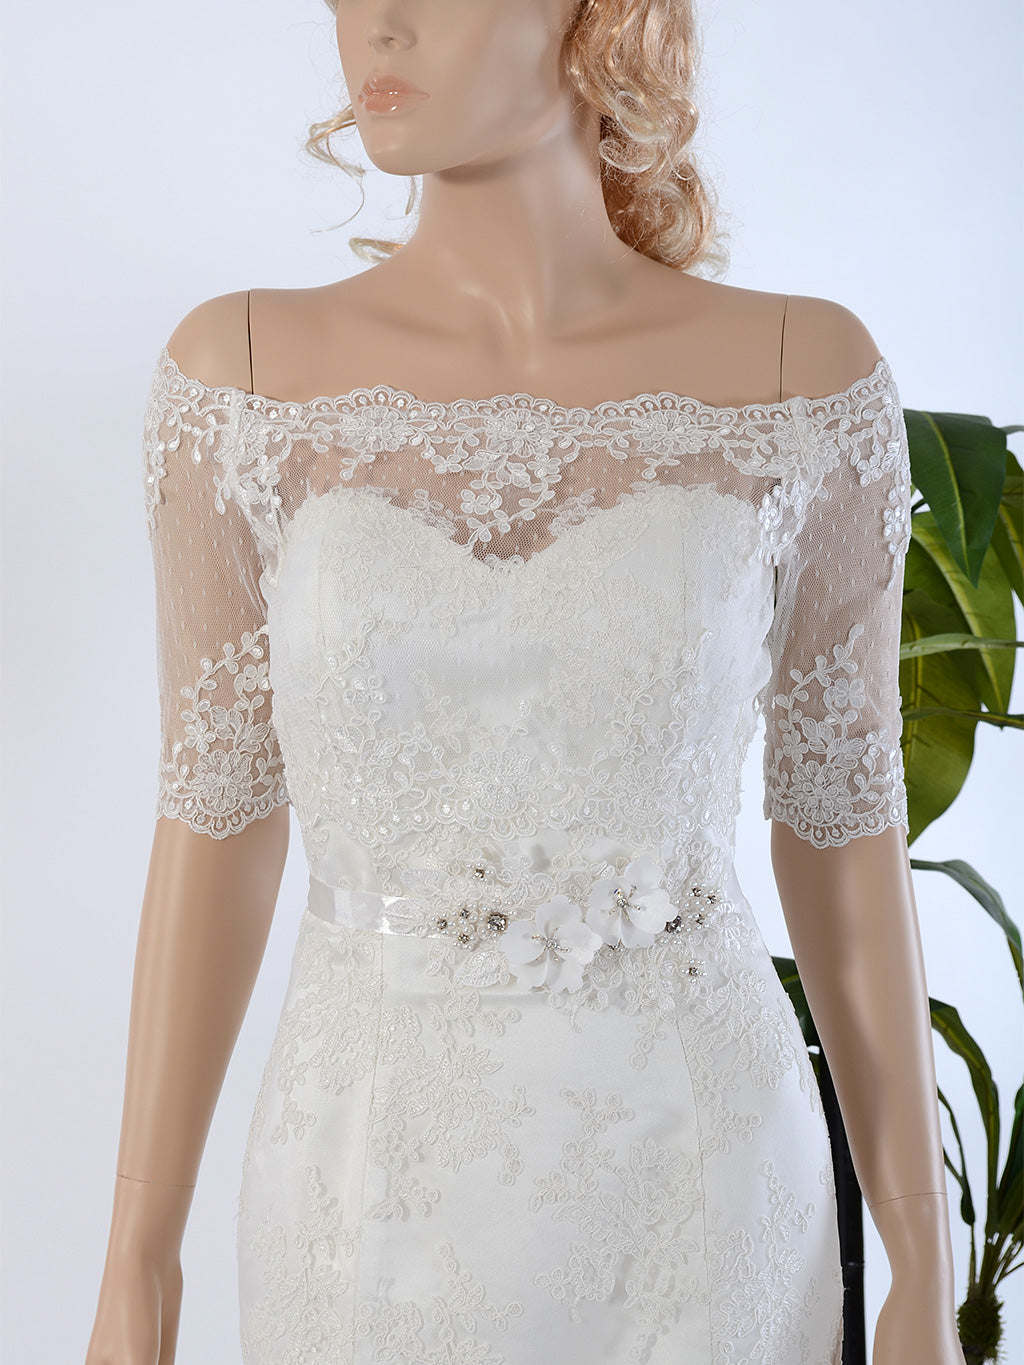 Elevate Your Bridal Look with a Wedding Dress Bolero